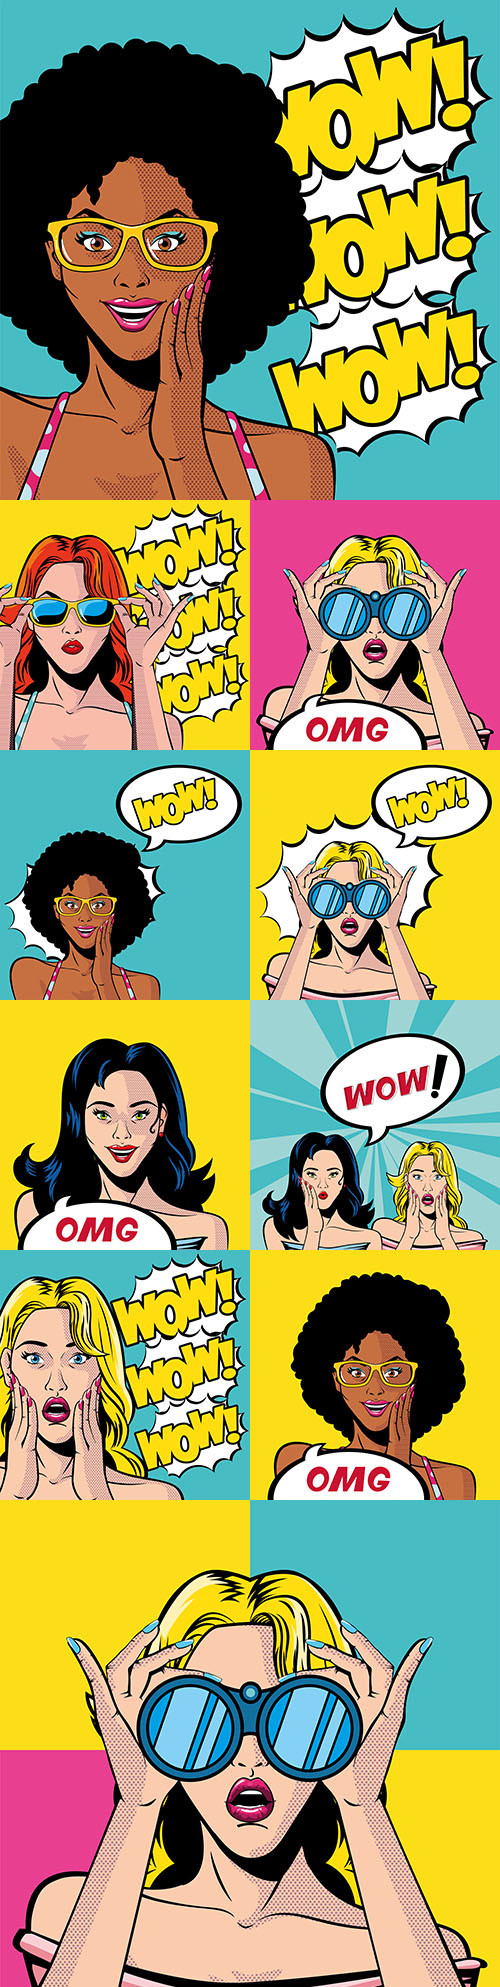 Woman comic speech bubble illustrations pop art 5
